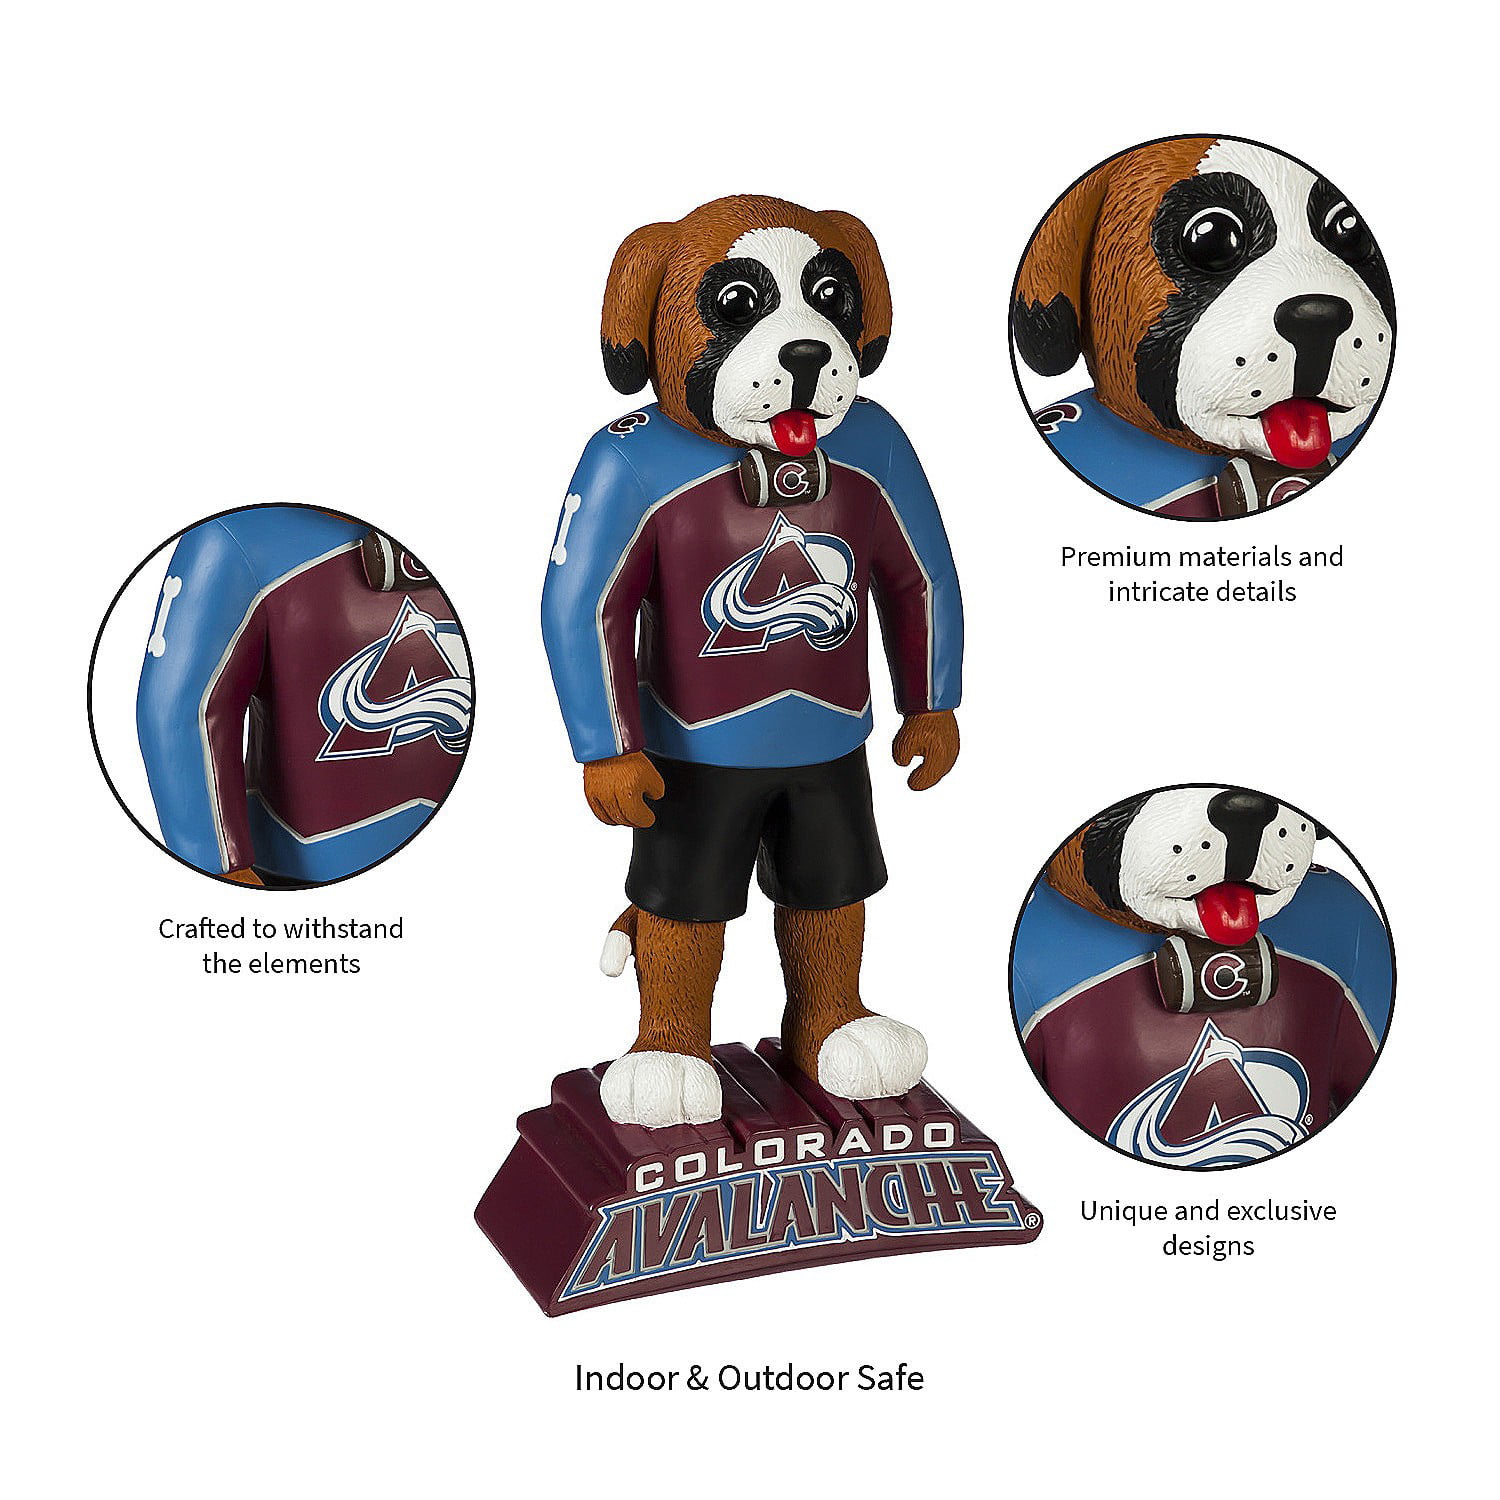 The story of the Colorado Avalanche's original mascot